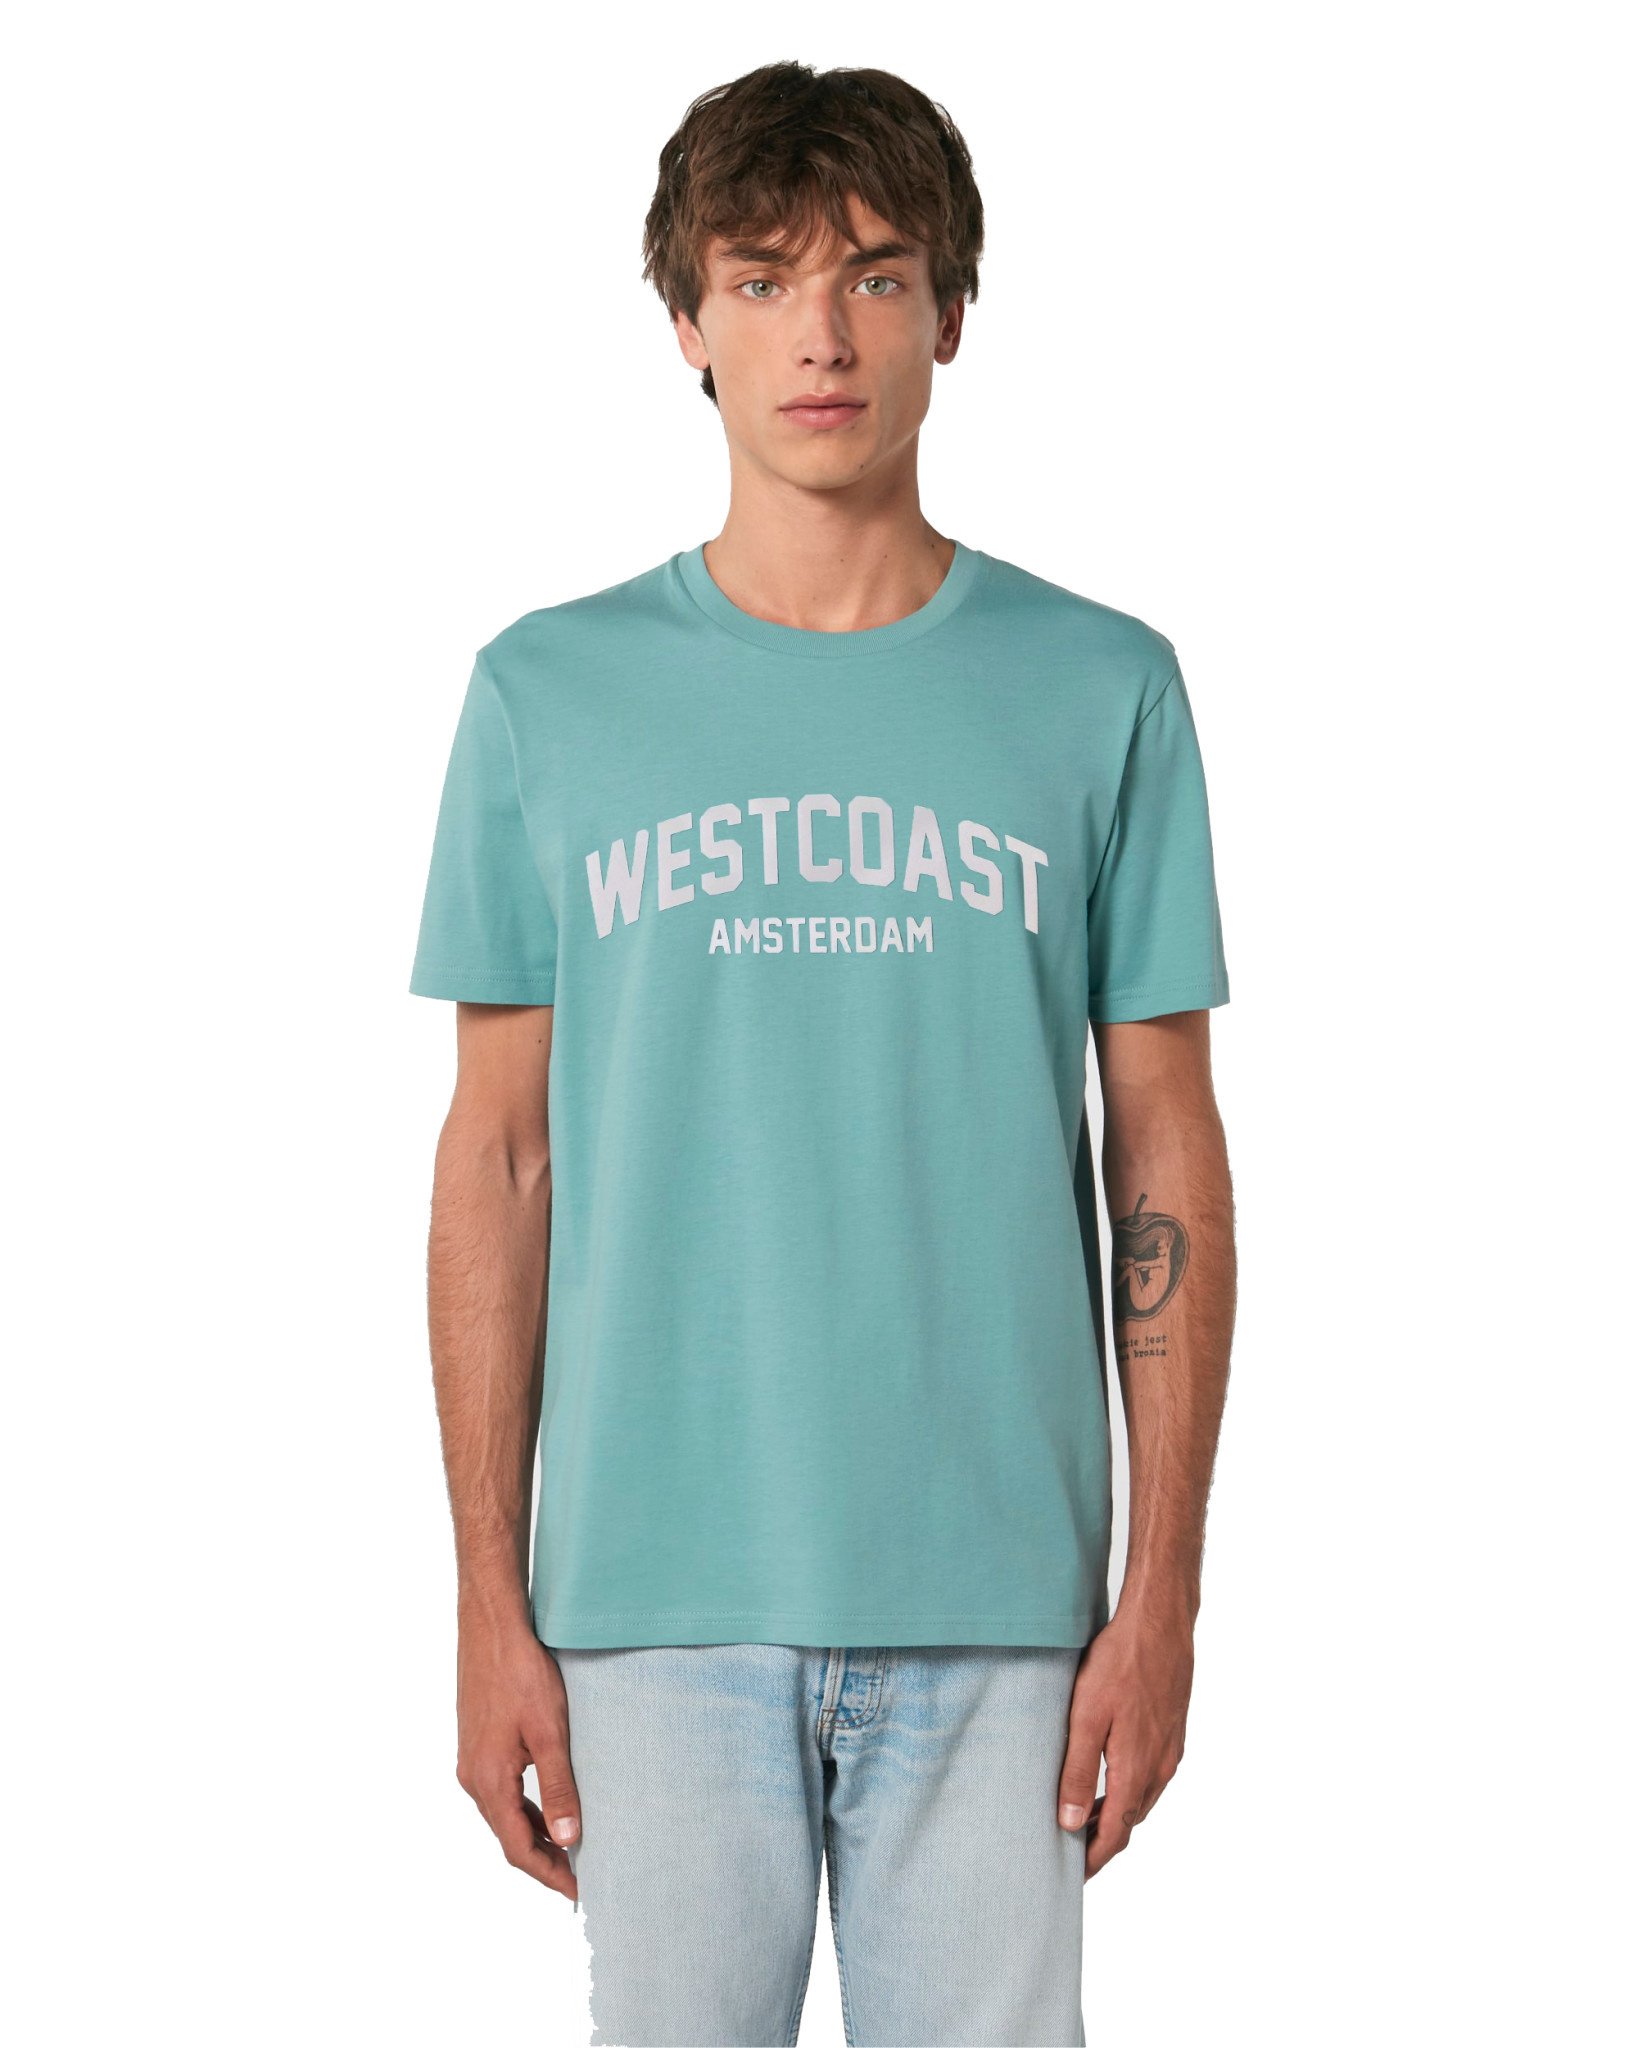 Westcoast T-shirt